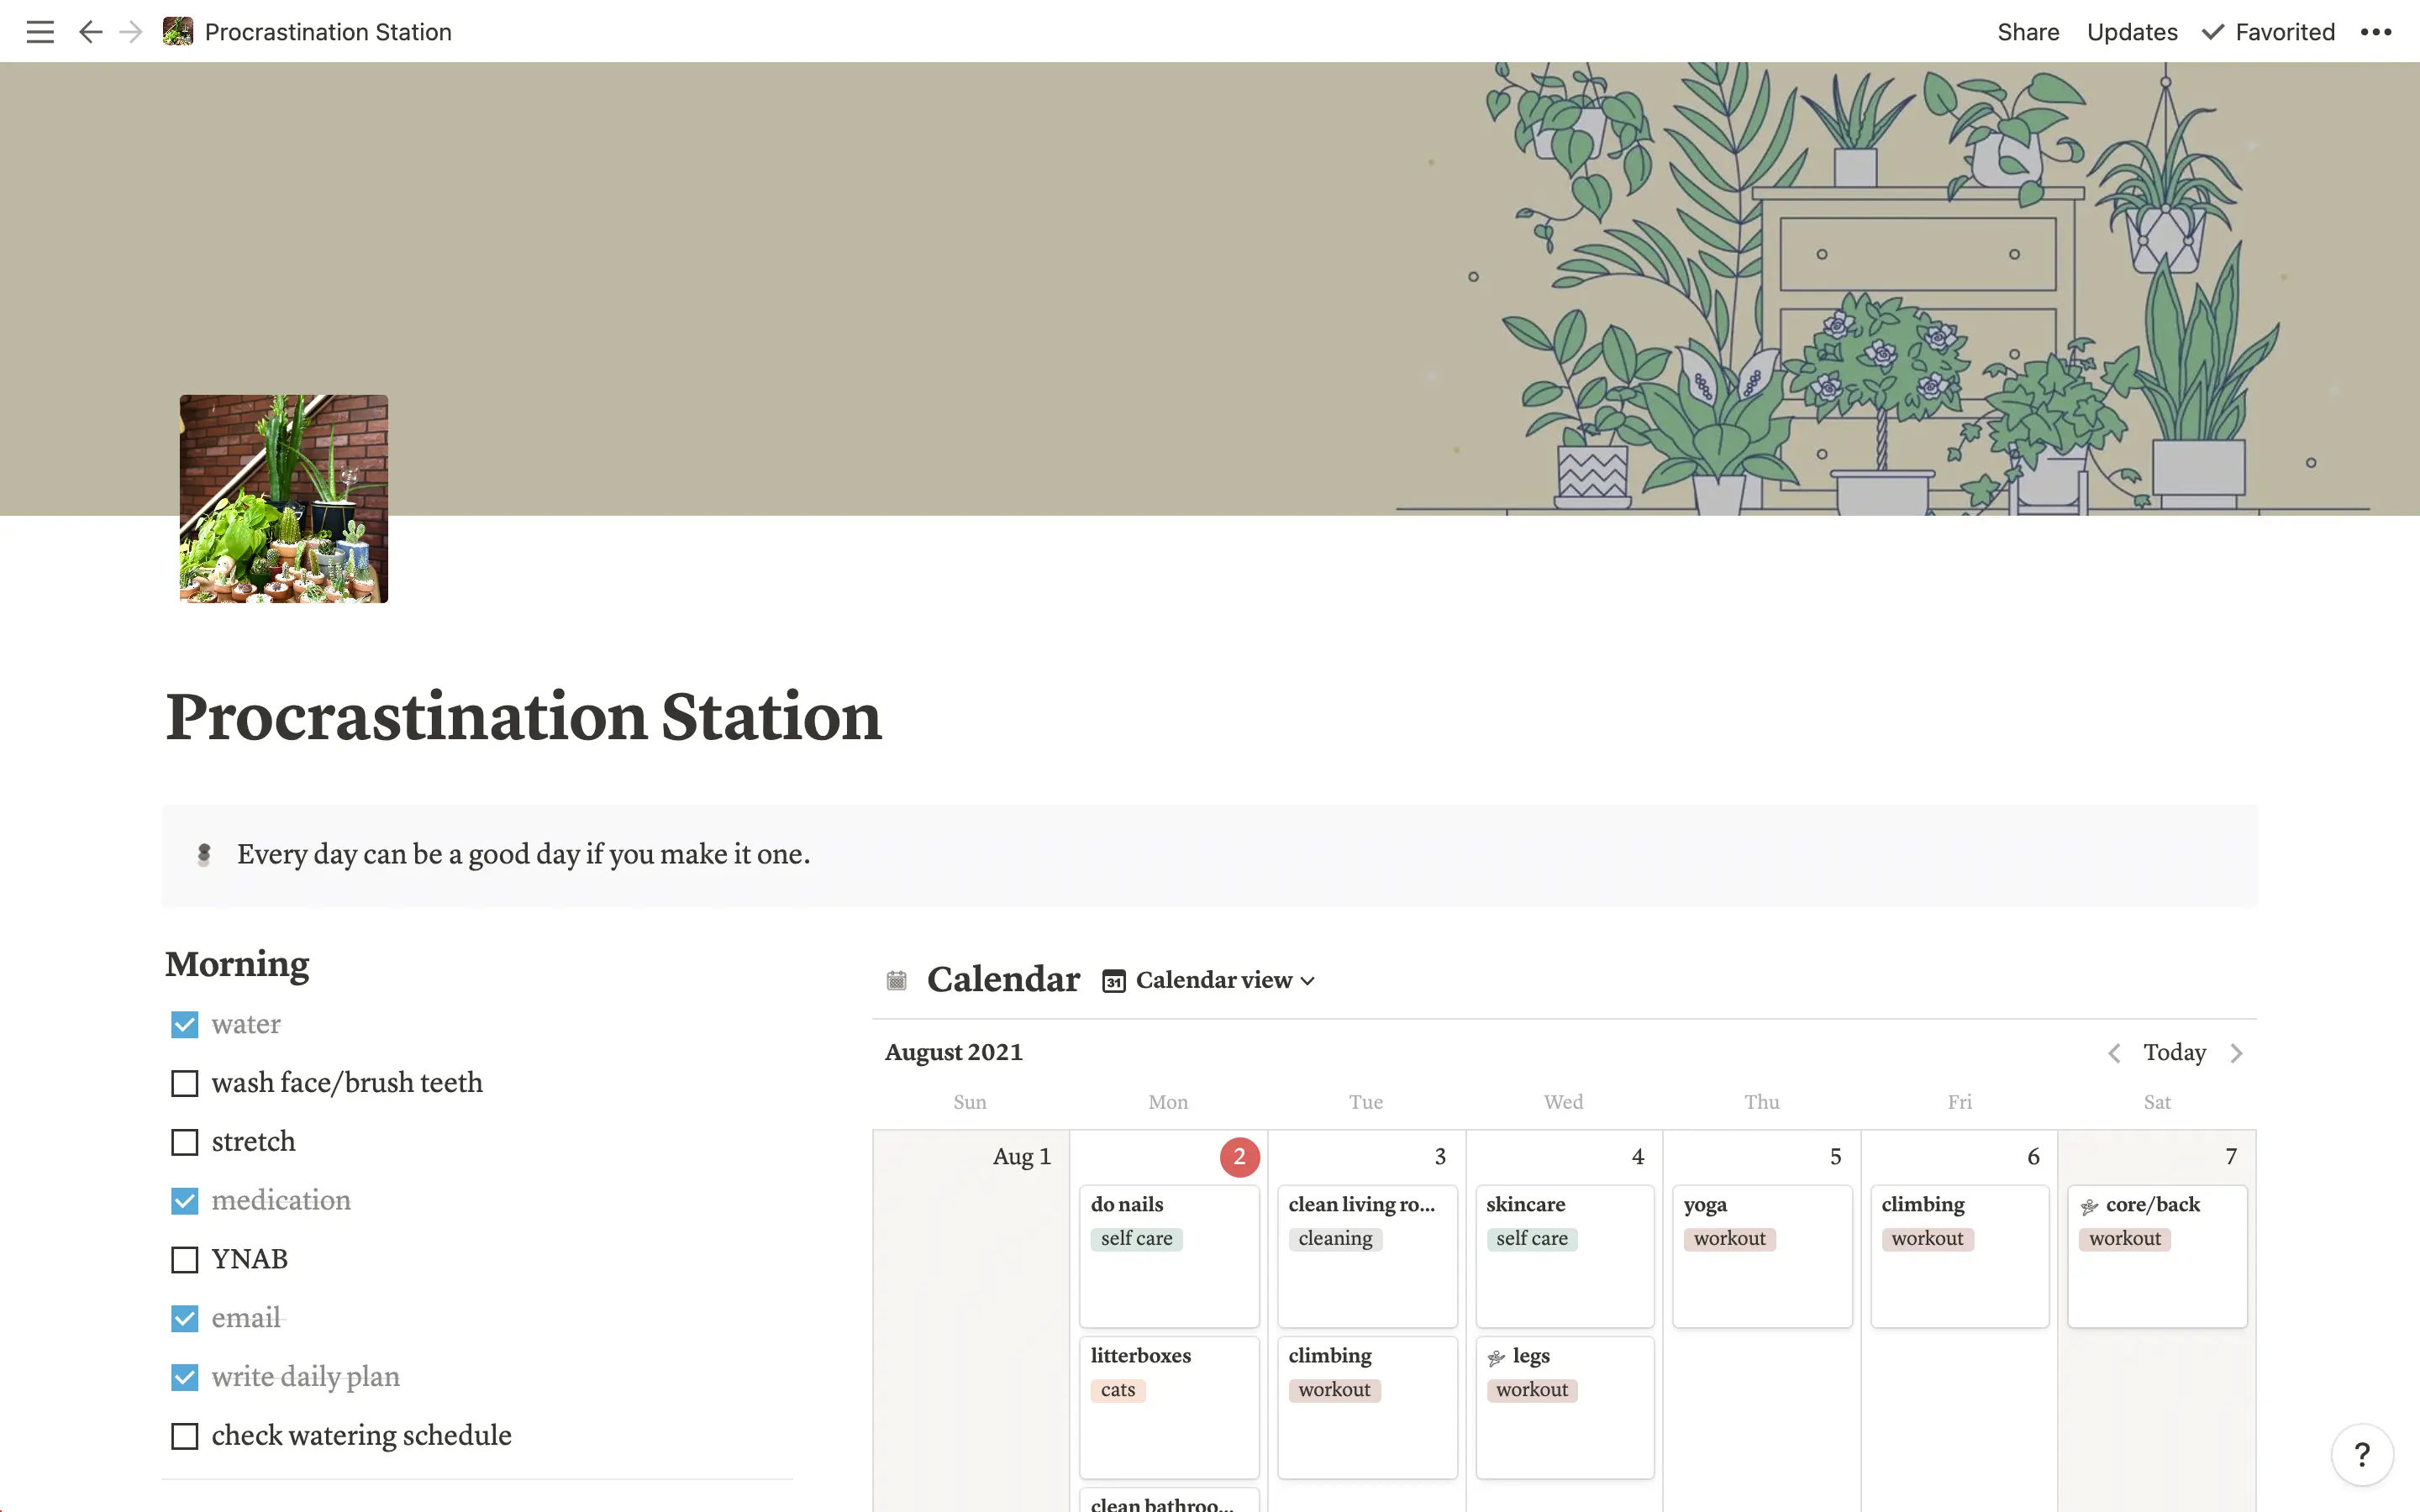 Procrastination Station Dashboard Template image